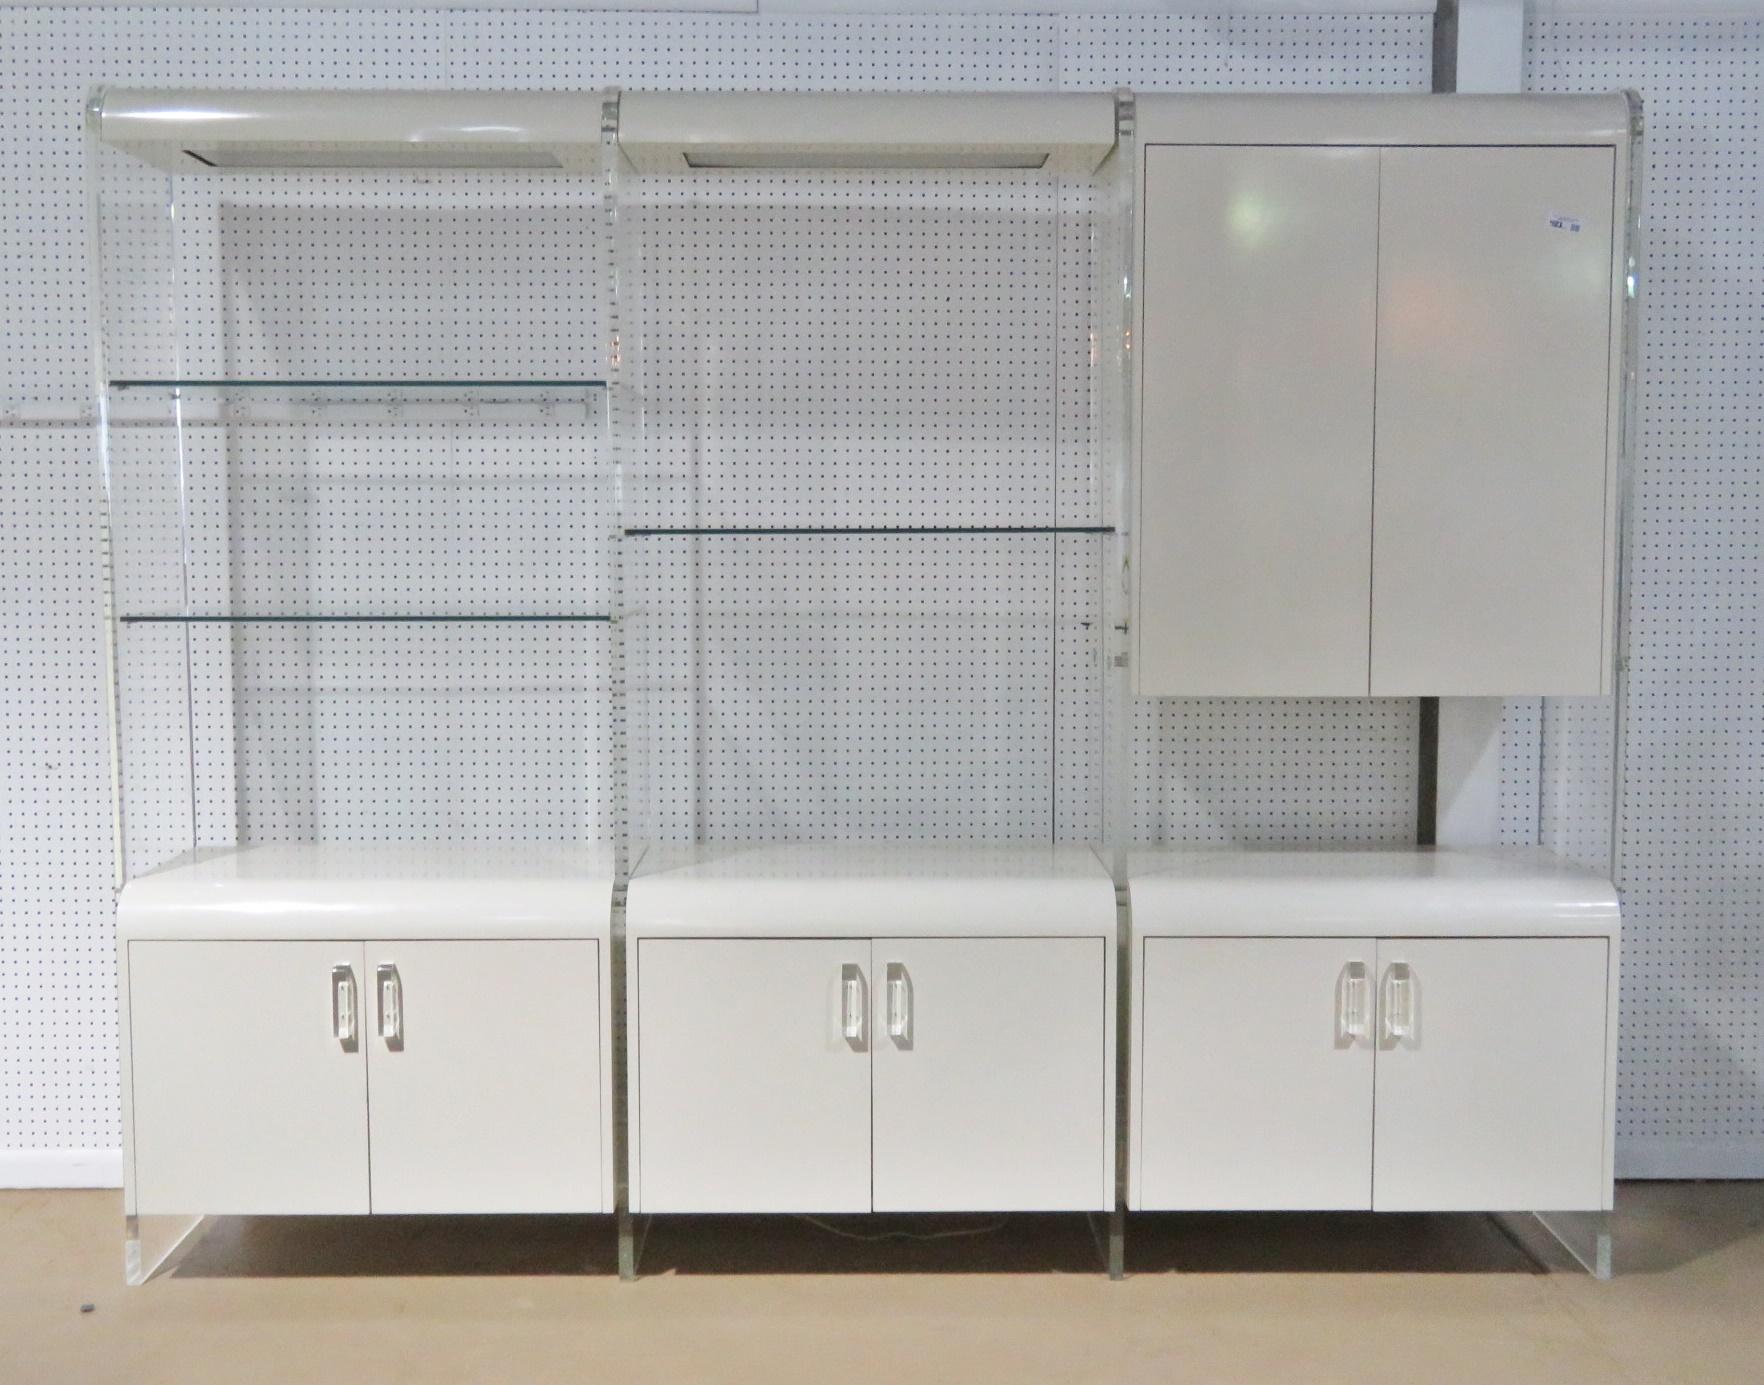 Large modular Mid-Century Modern wall unit offering multiple flexible storage options. Impressive 1